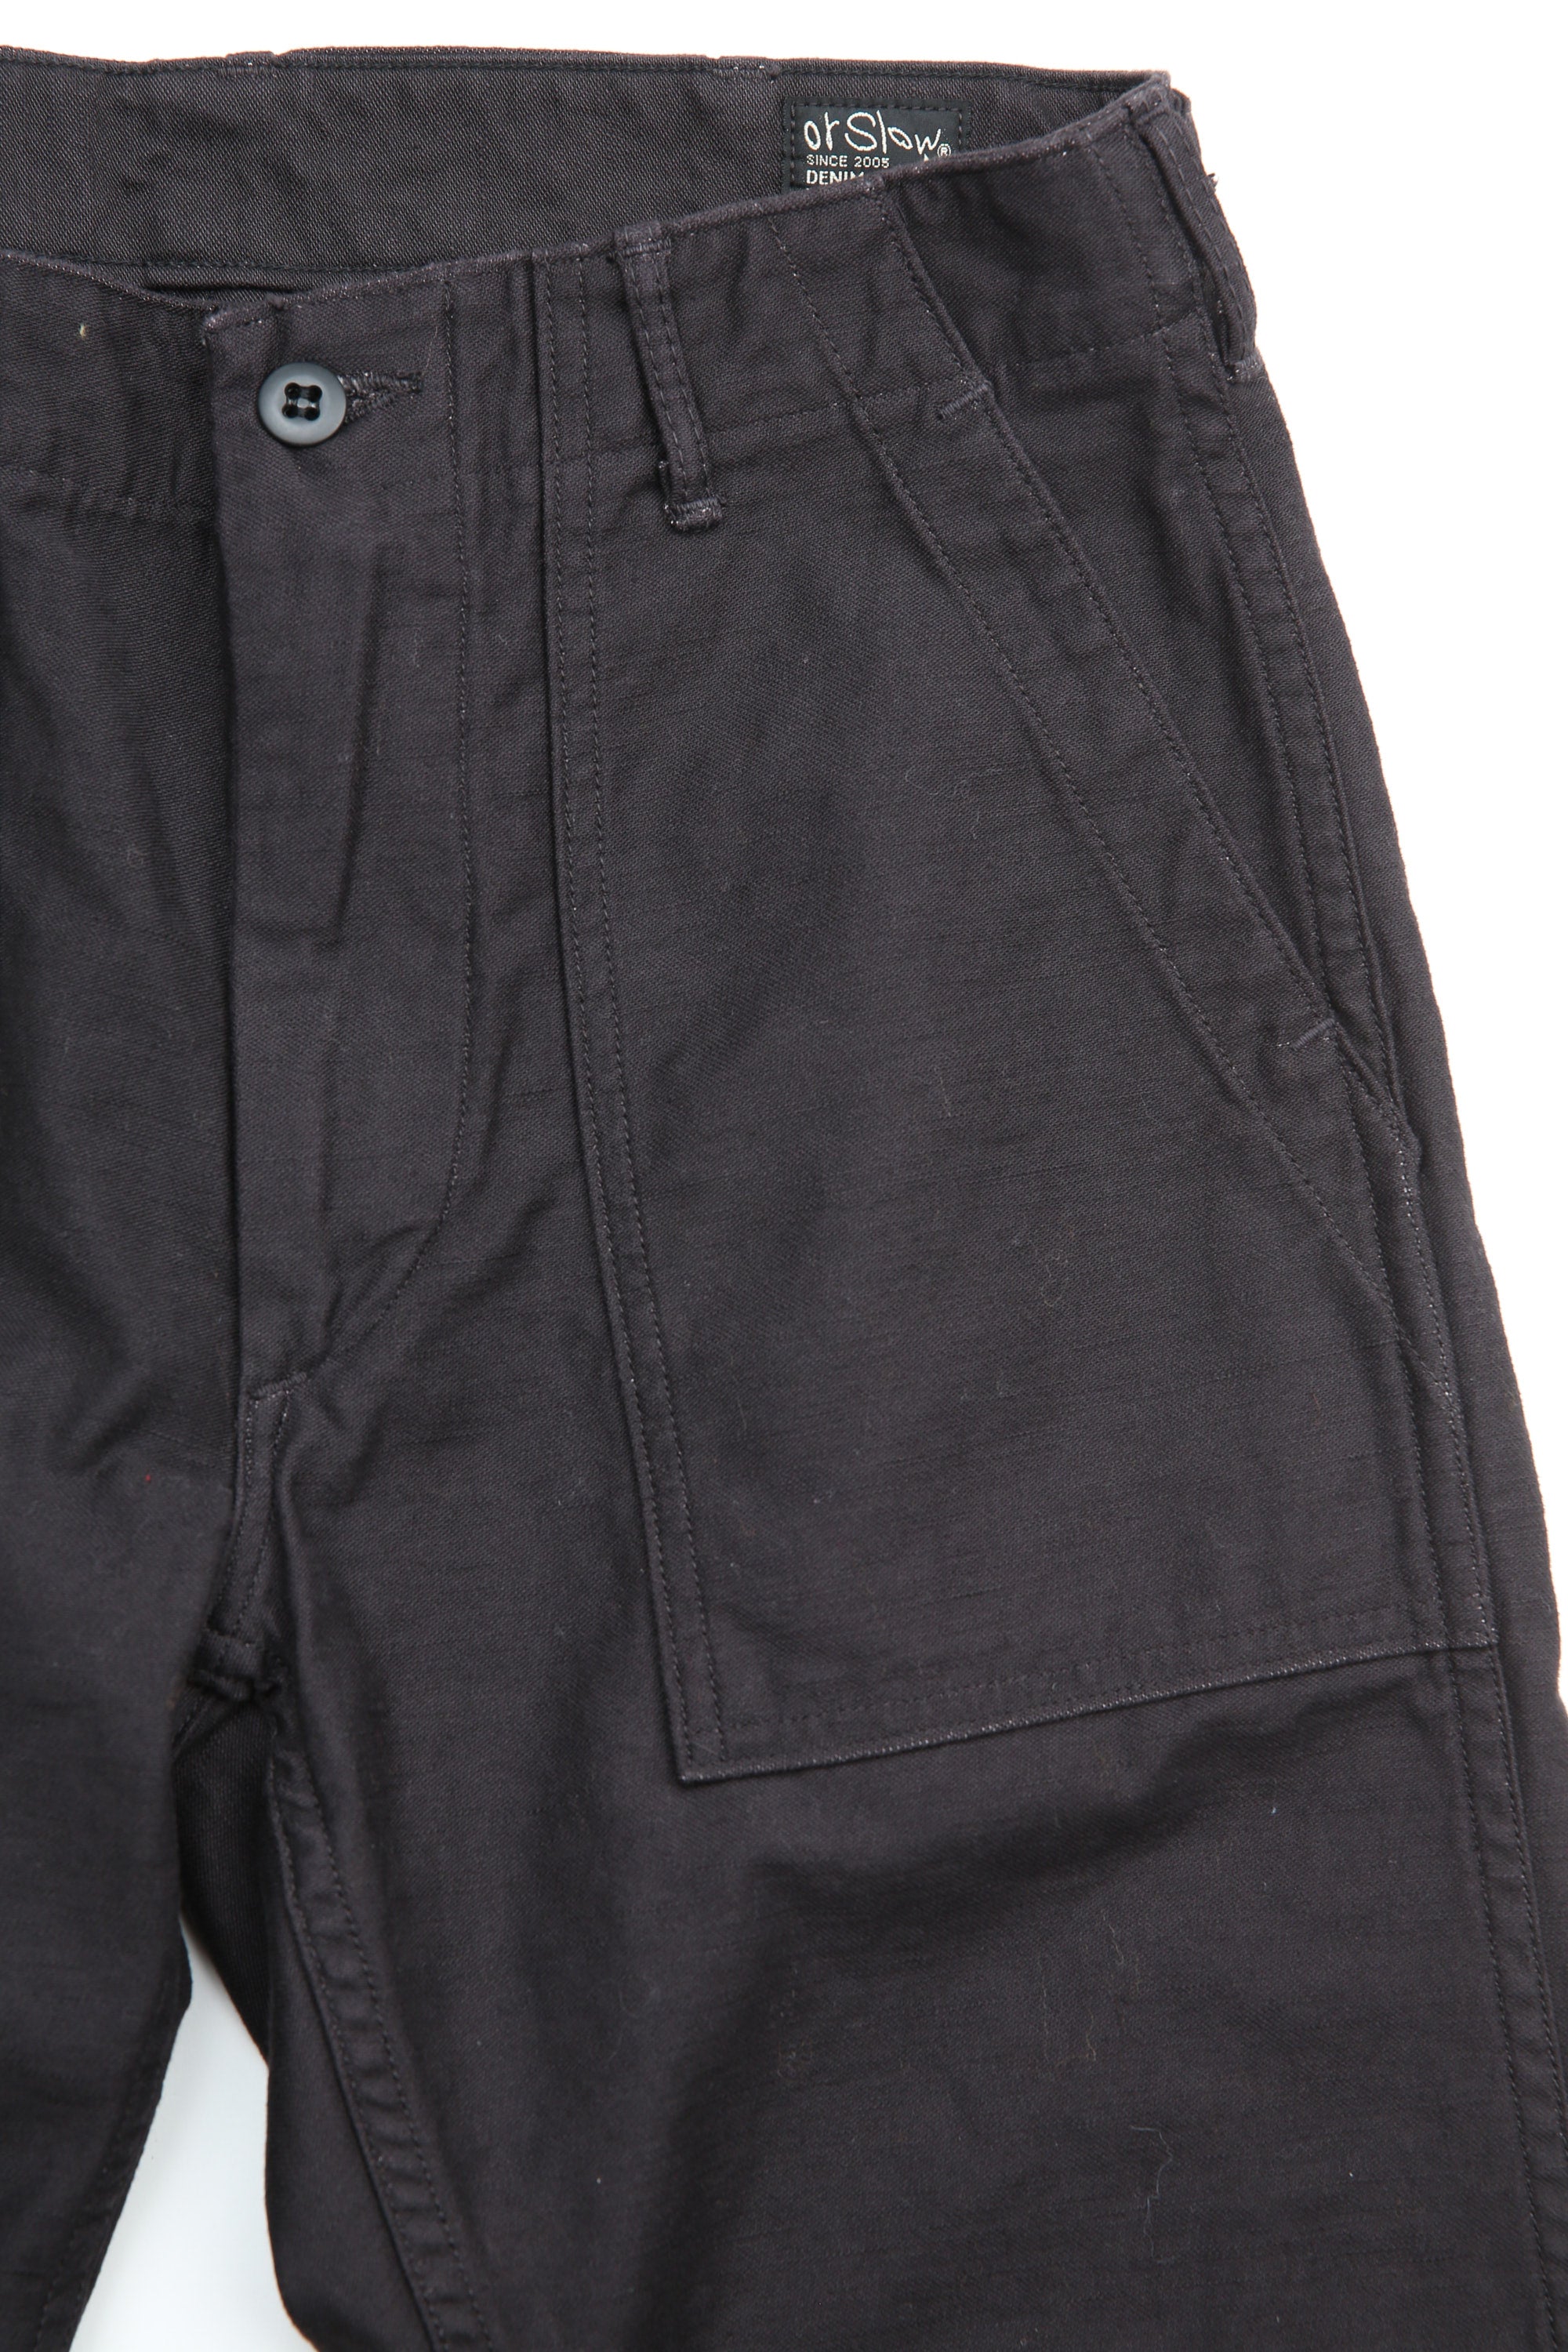 Men's Pants – Page 2 – Totem Brand Co.